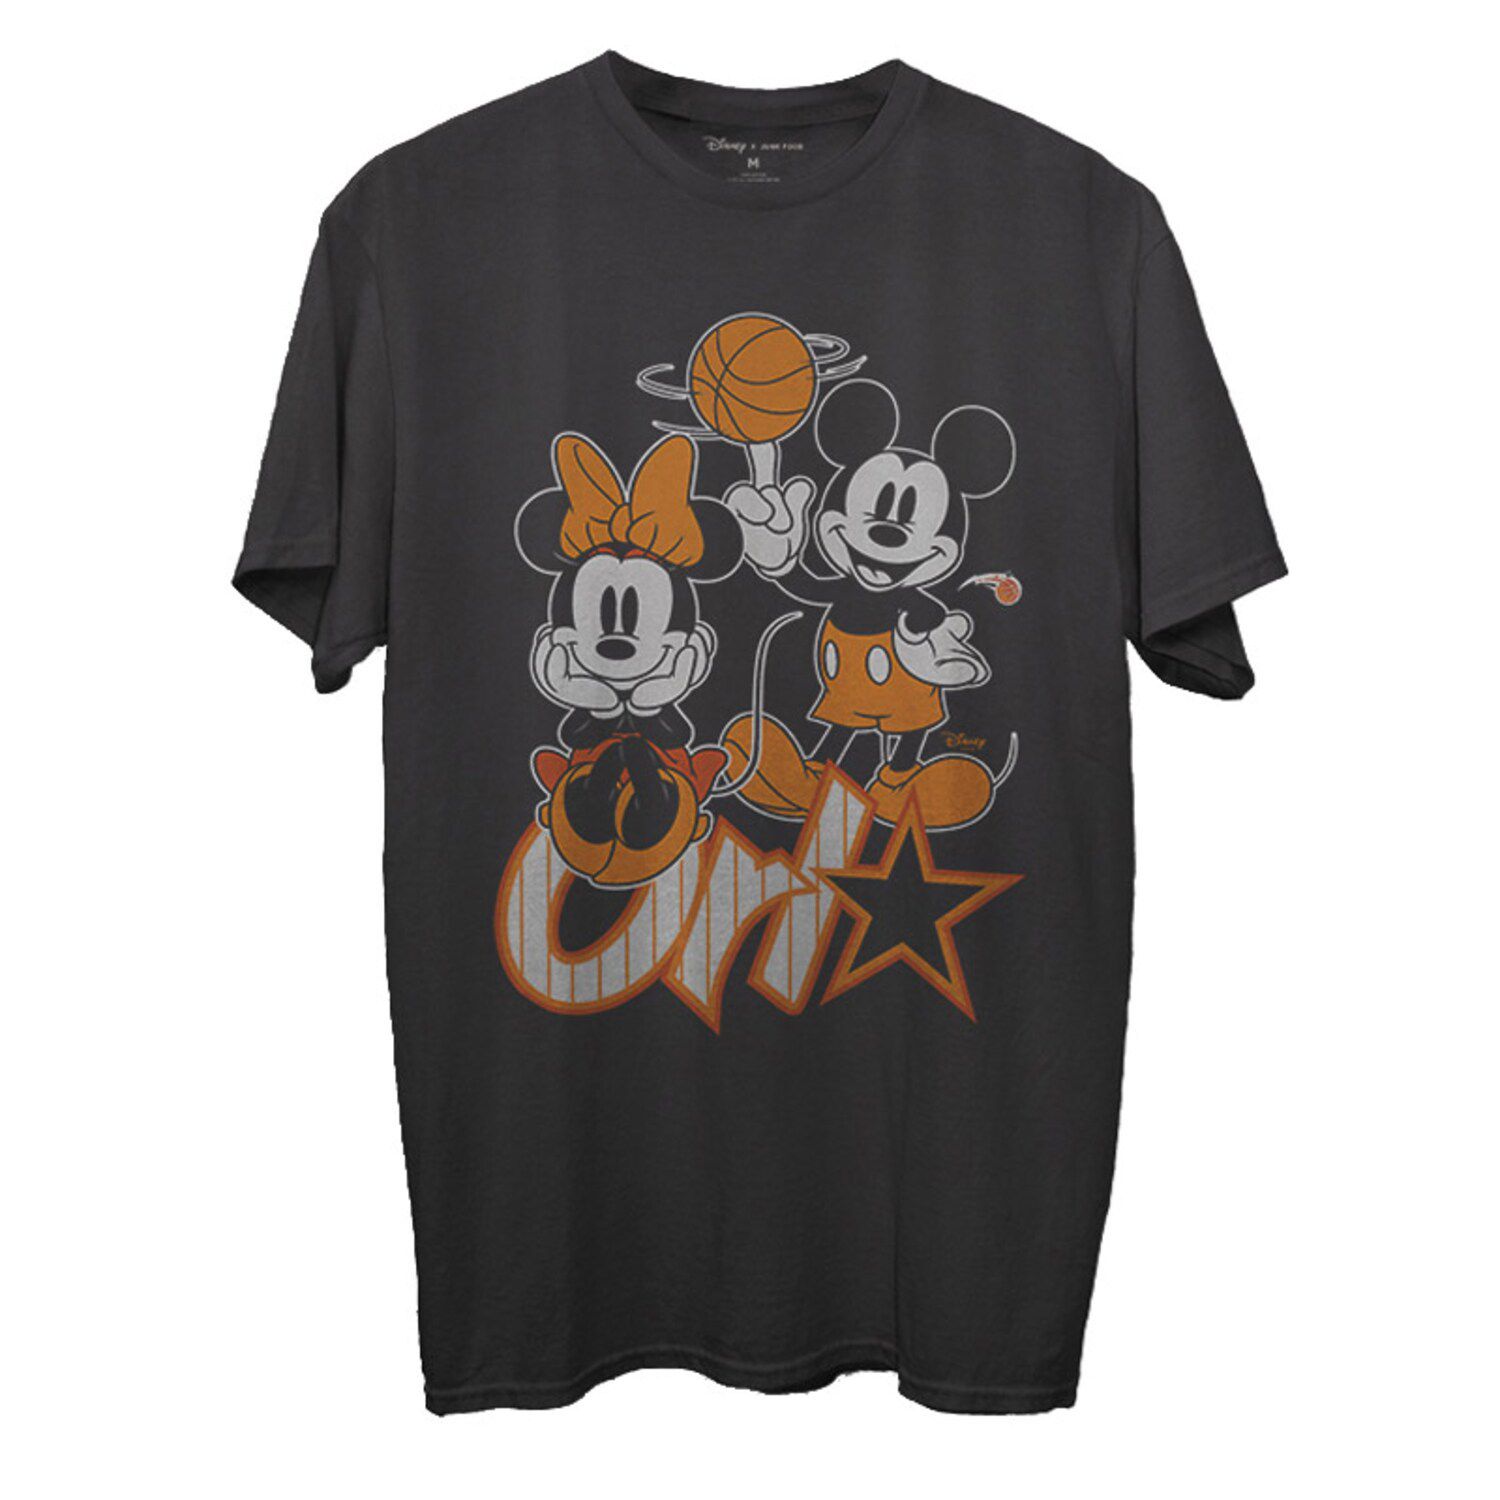 Image for Unbranded Men's Junk Food Black Orlando Magic Disney Mickey & Minnie 2020/21 City Edition T-Shirt at Kohl's.